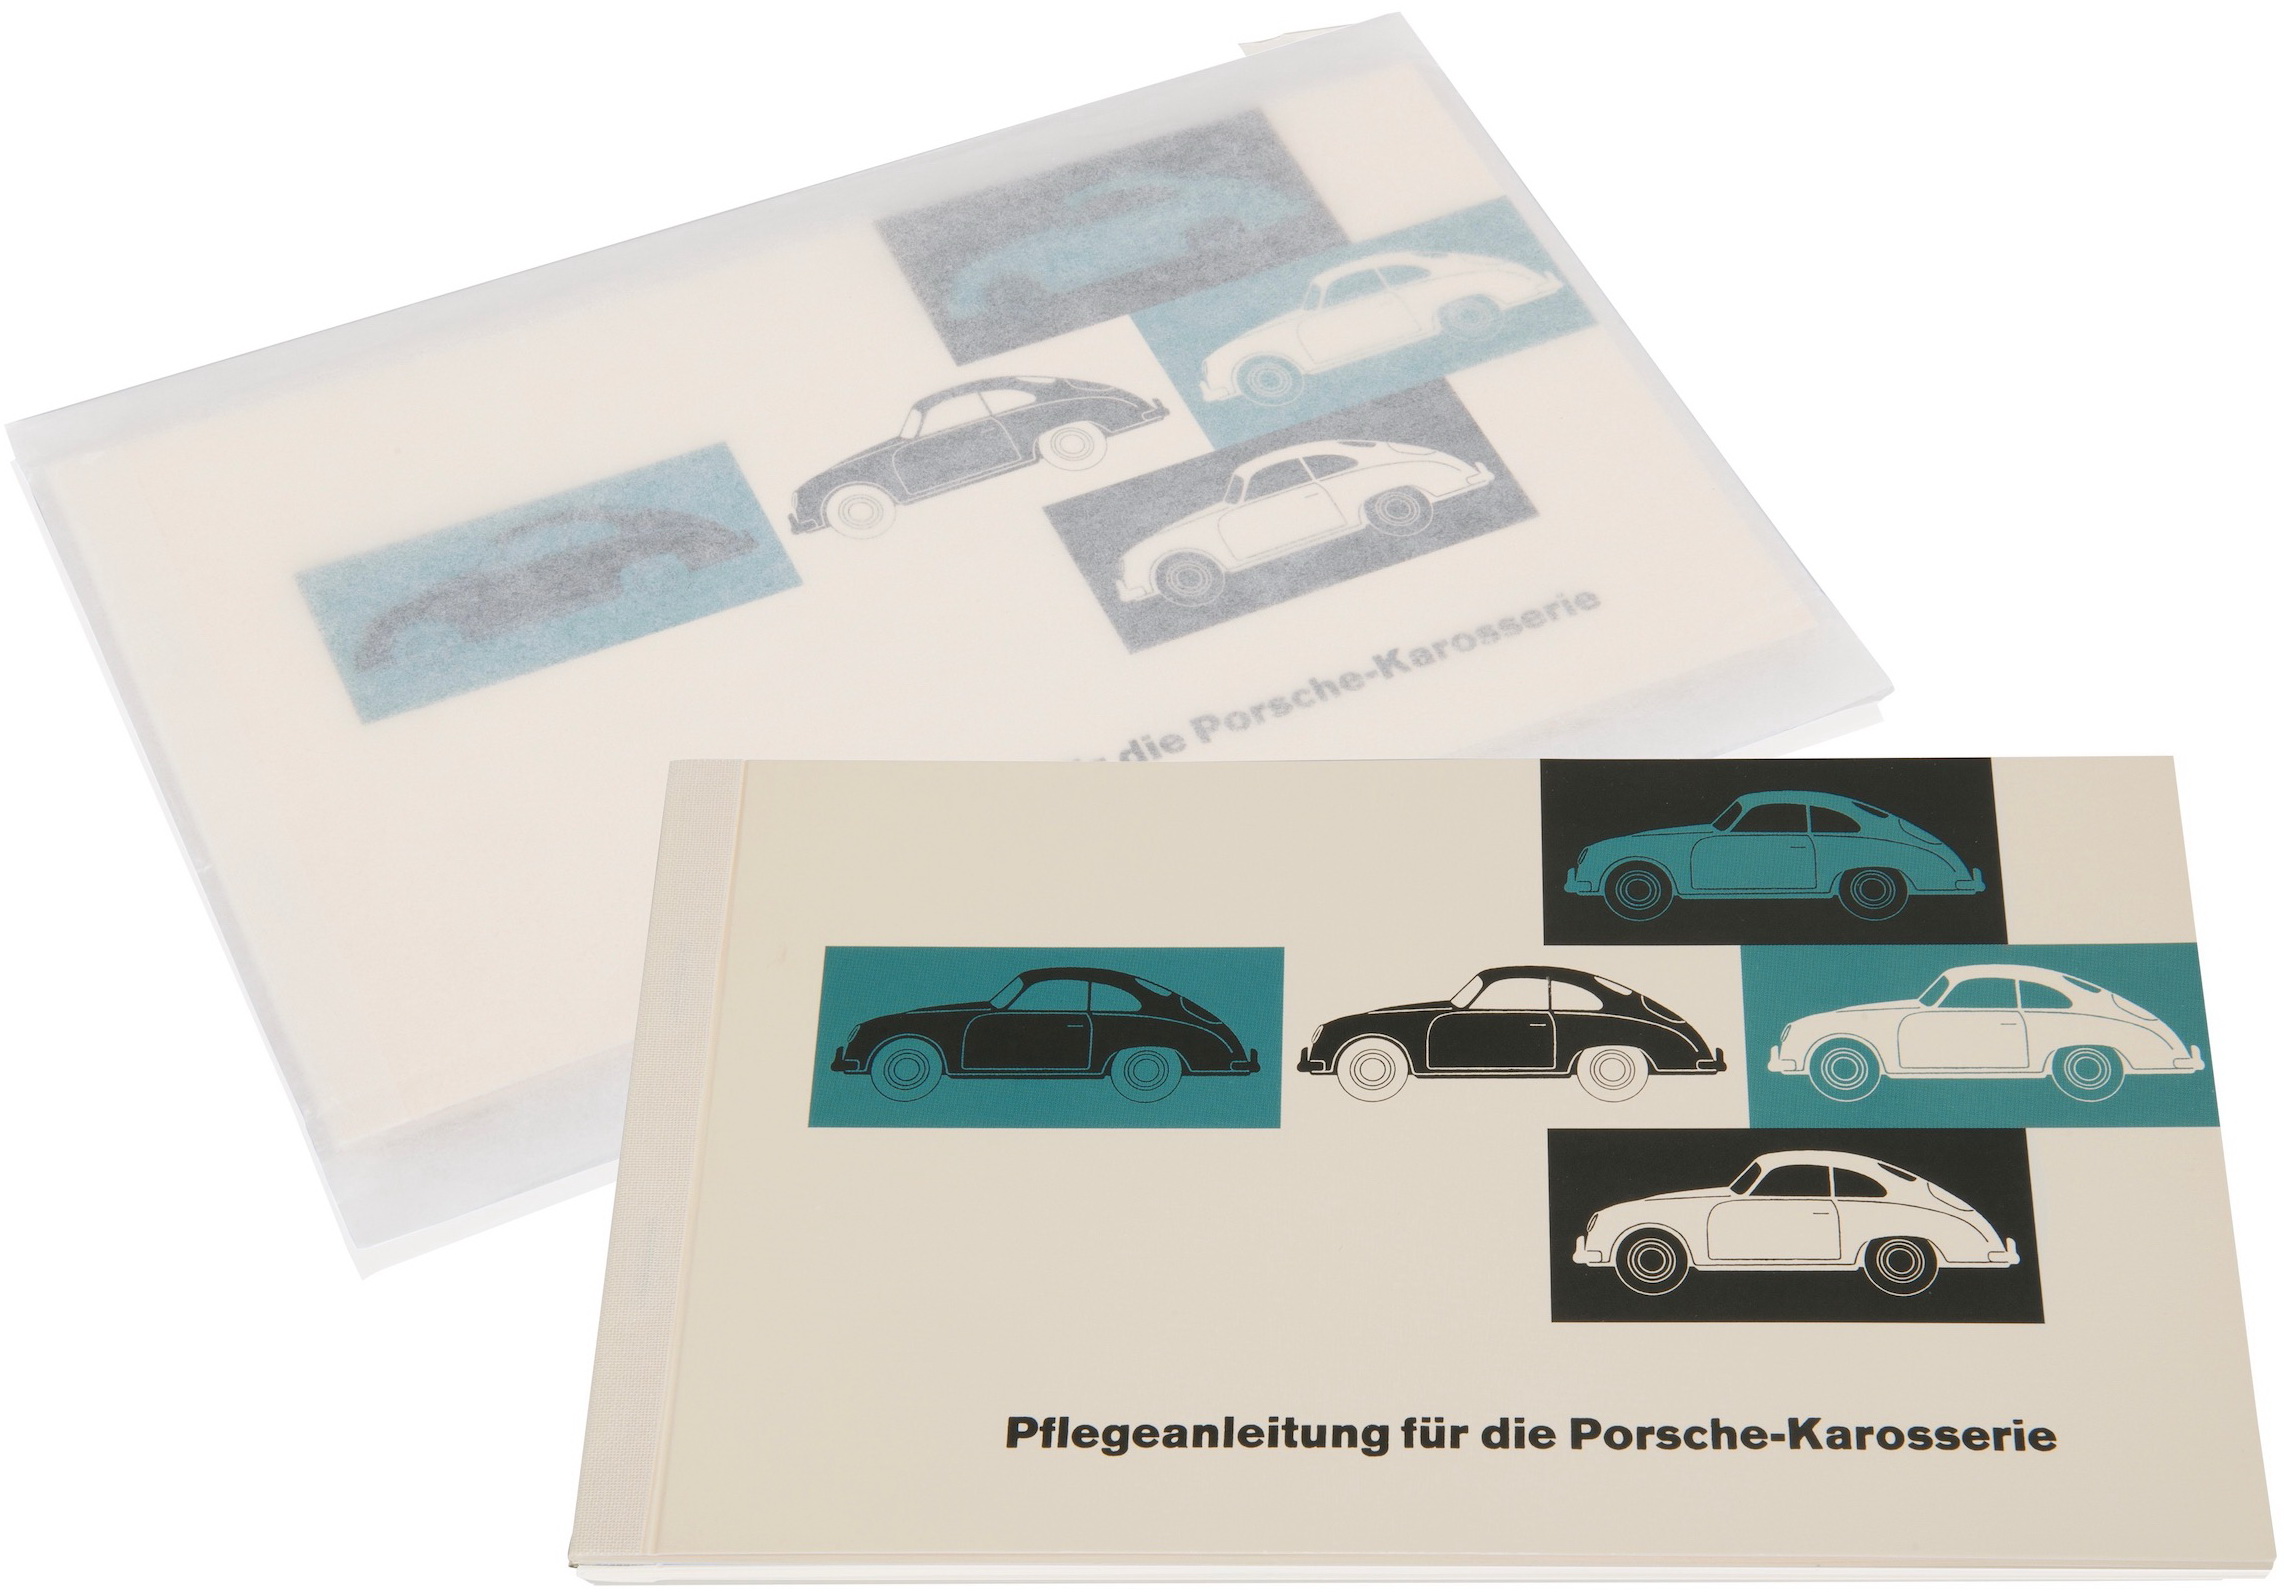 Porsche manuals